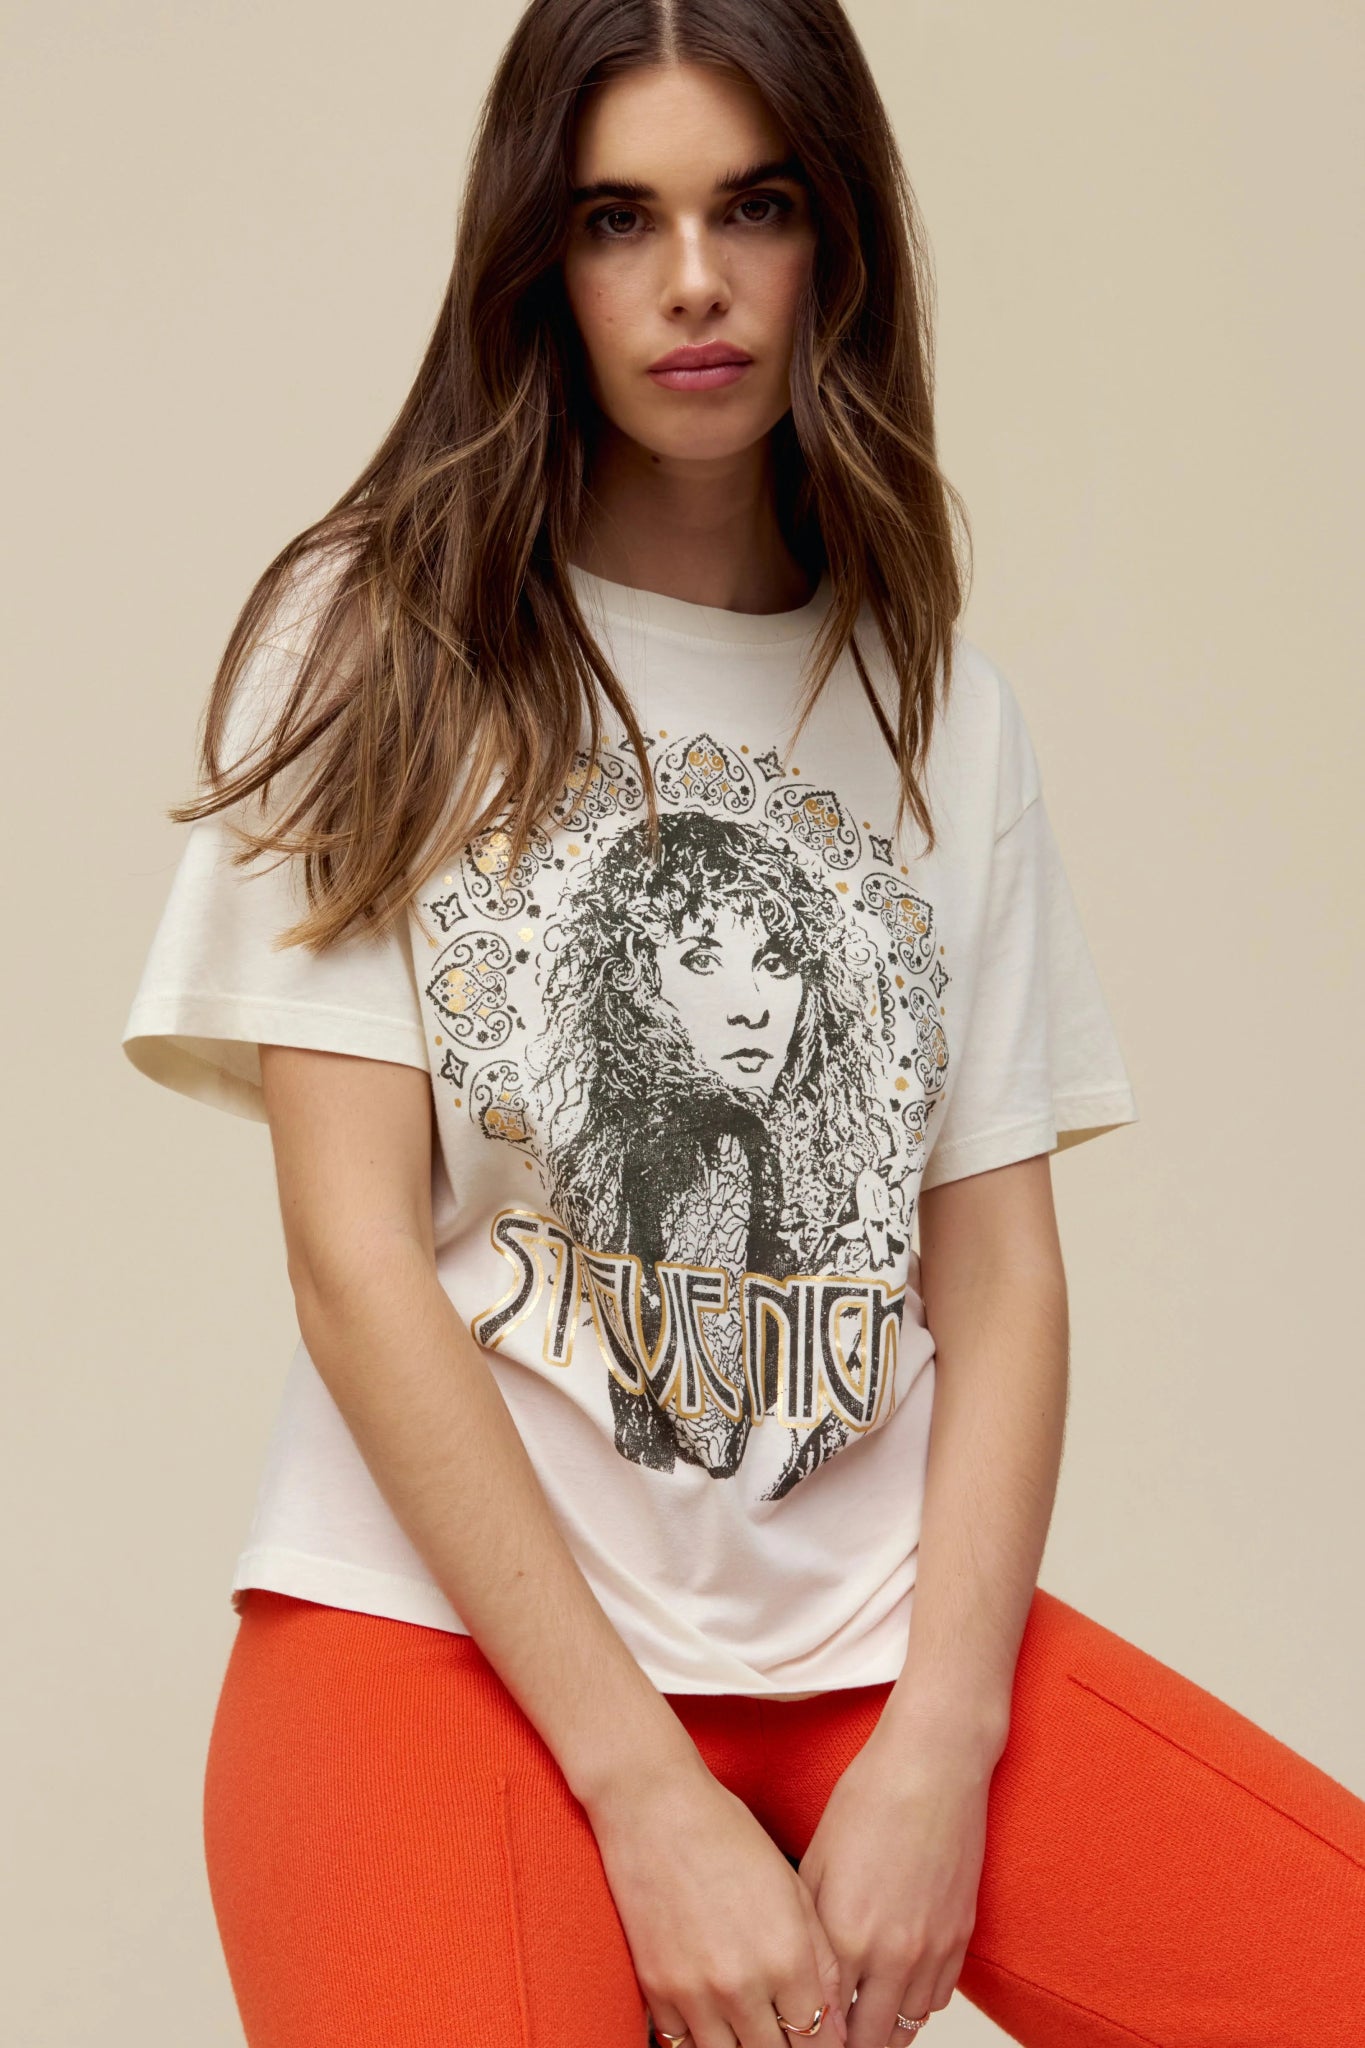 Daydreamer Graphic Tees | Stevie Nicks | Boyfriend T-Shirt - Women's Shirts & Tops - Blooming Daily